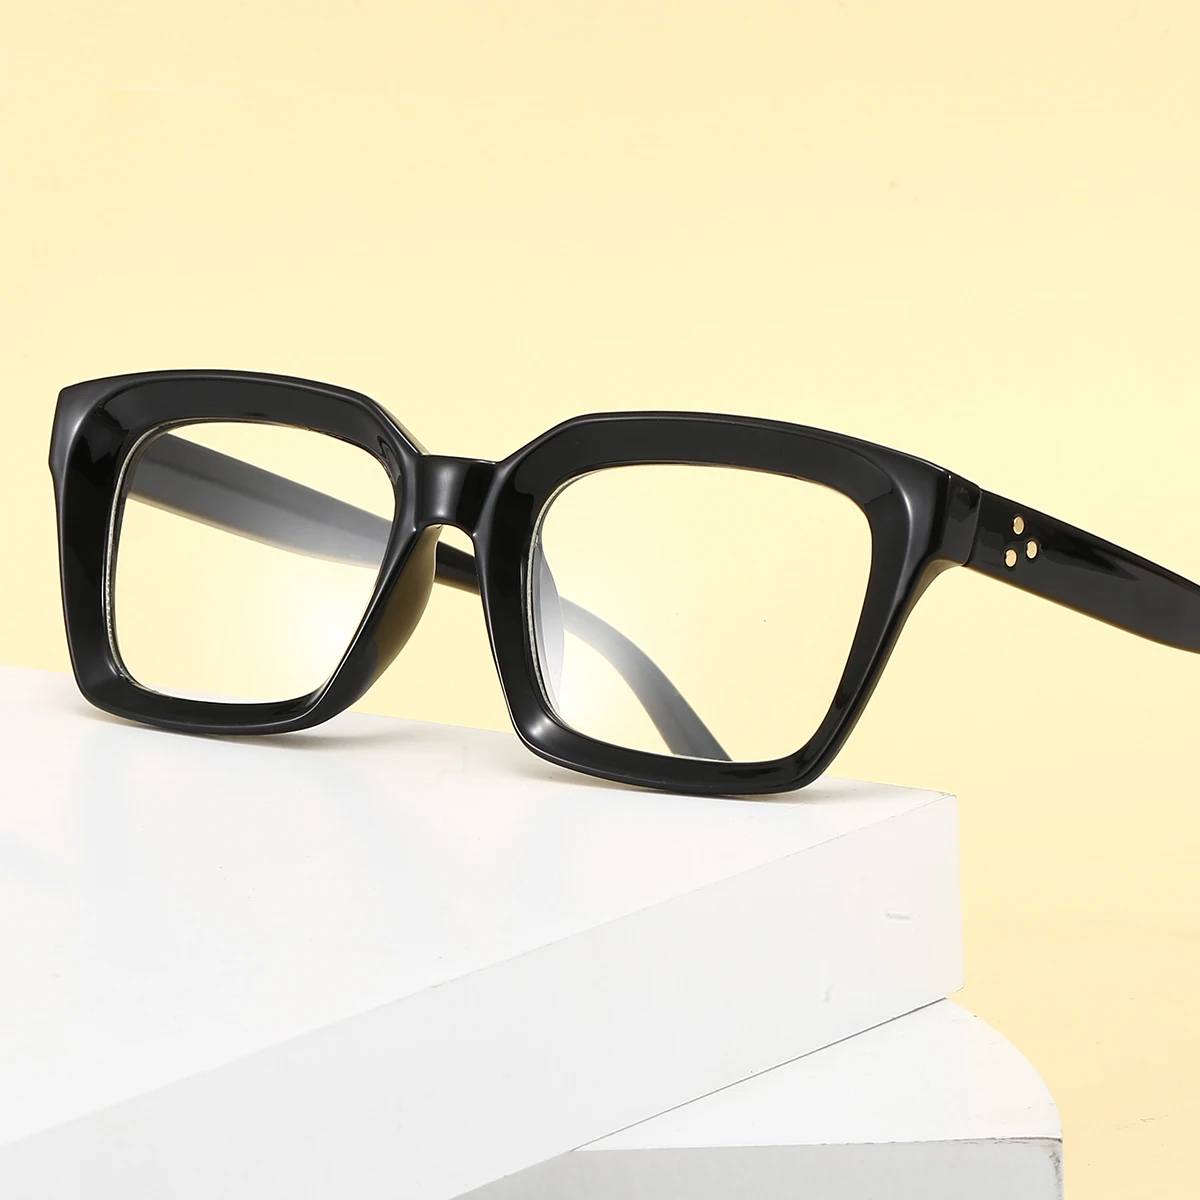 

2020 New Hot Selling Amason Presbyopic Fashion Read Glasses Frame Women Men CE Computer Reading Glasses